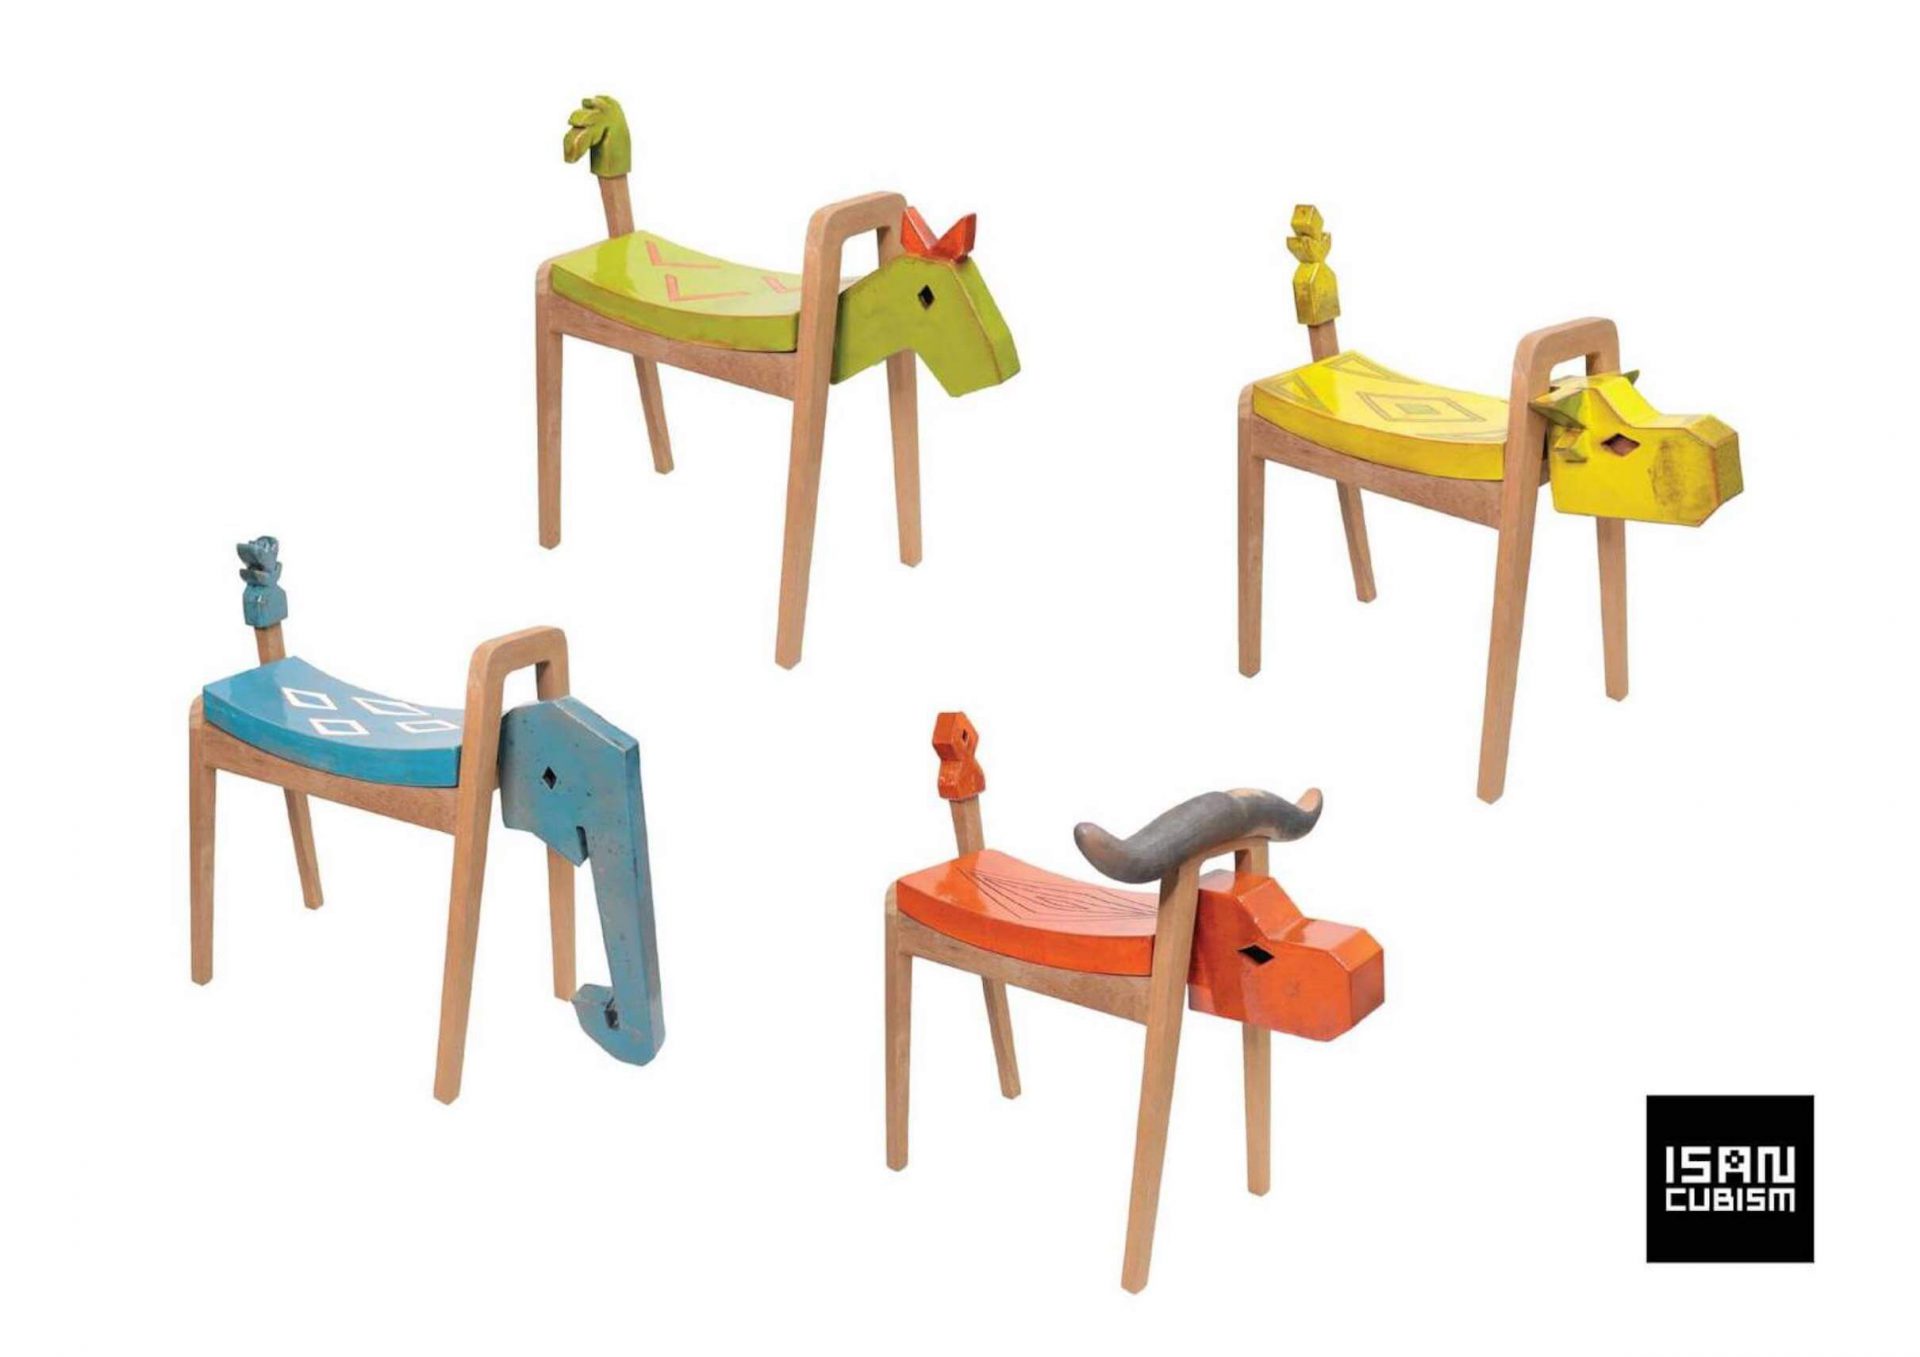 Talent Thai - Deesawat X Isan cubism 4 toy chairs